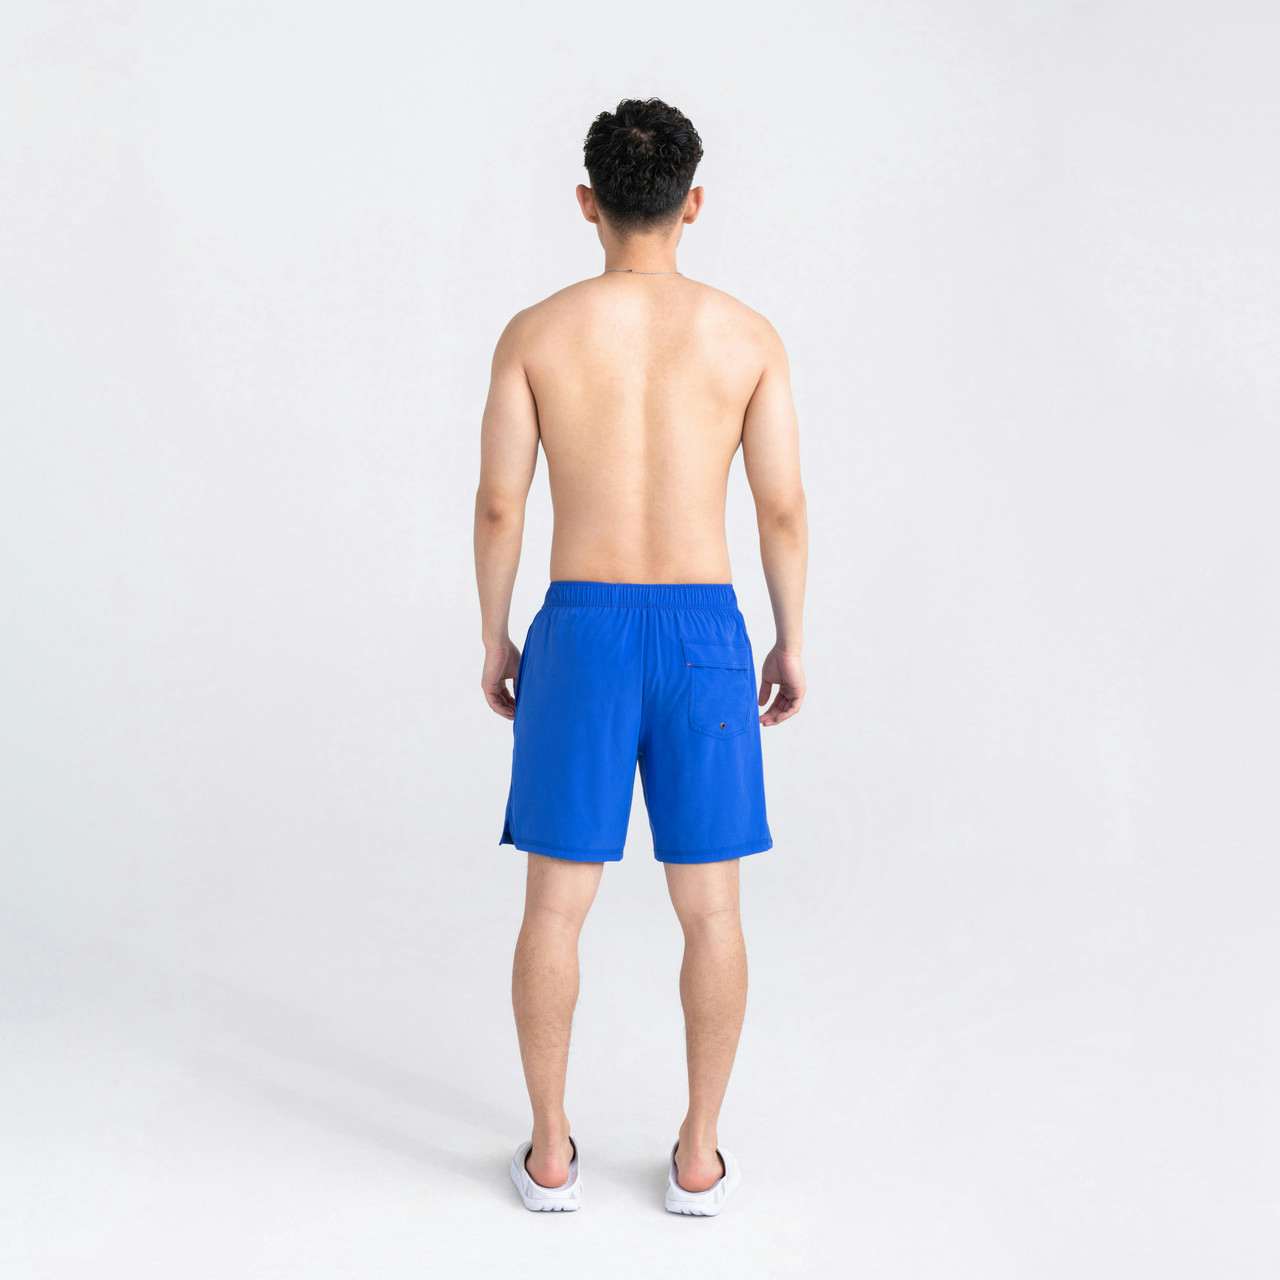 Oh Buoy 2N1 Volley Shorts 7" Sport Blue